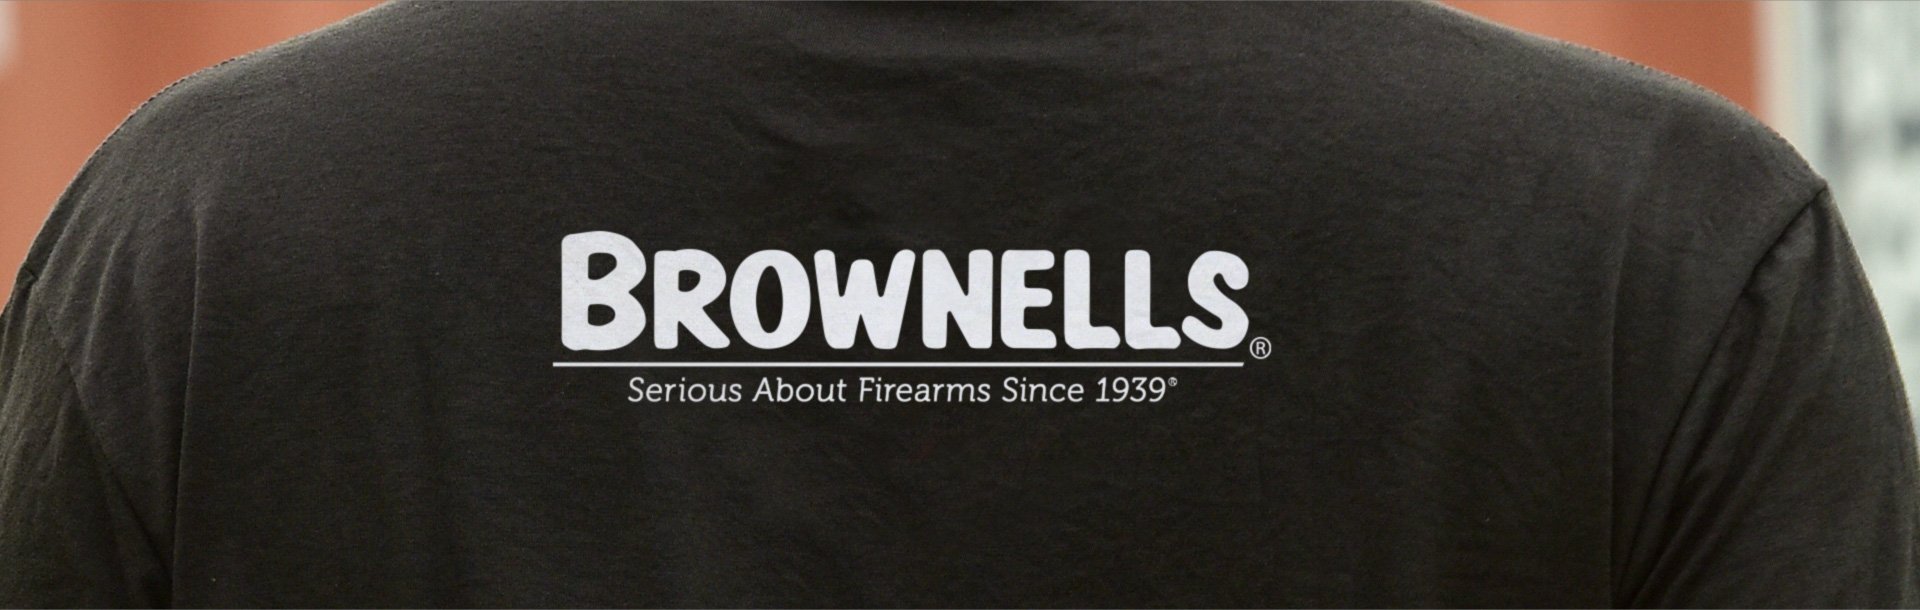 Brownells Logos_CLP